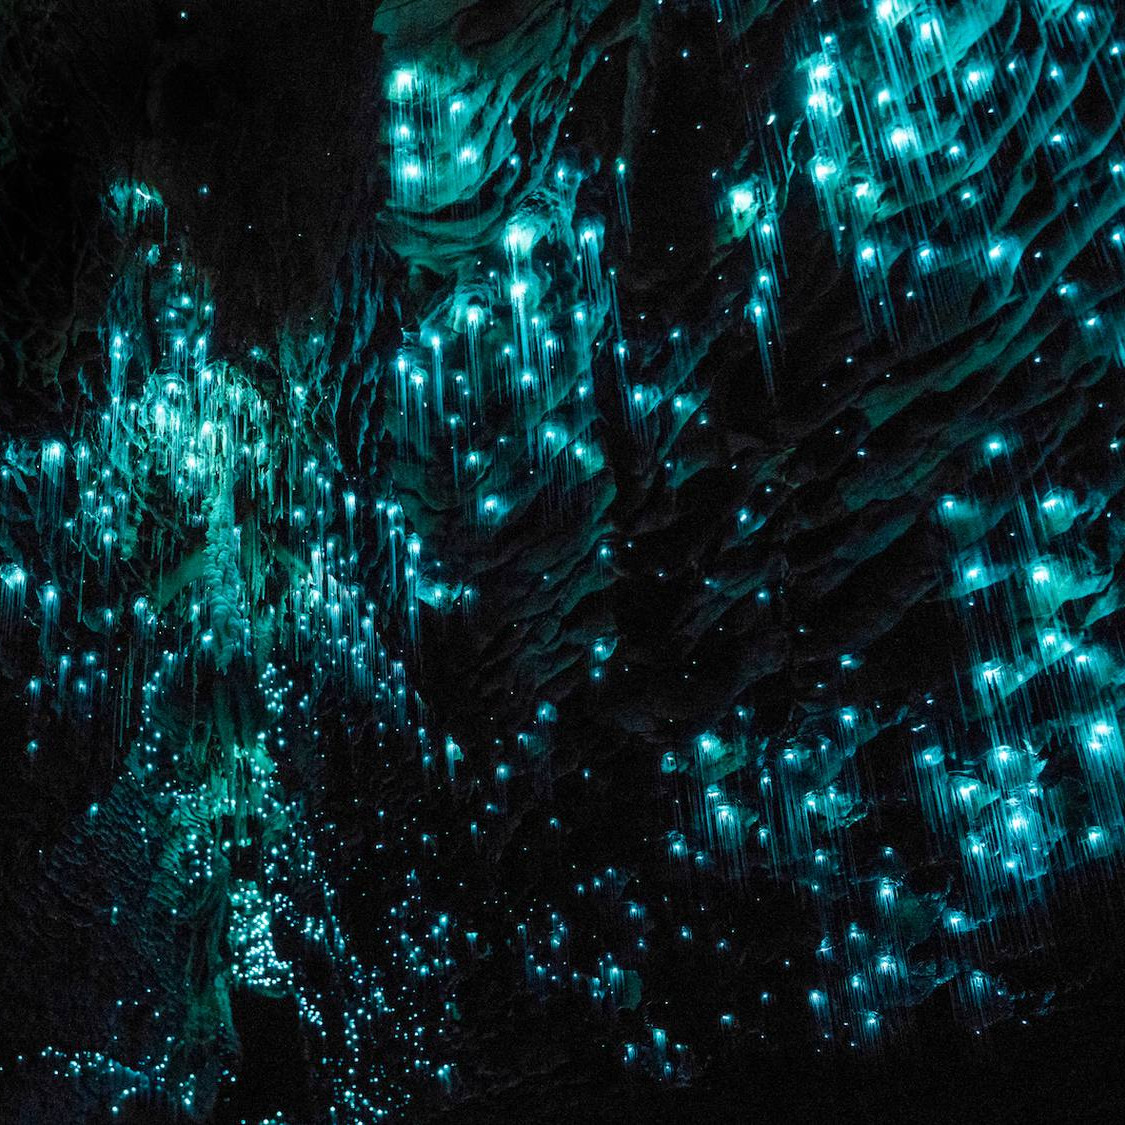 waitomo glowworm caves new zealand